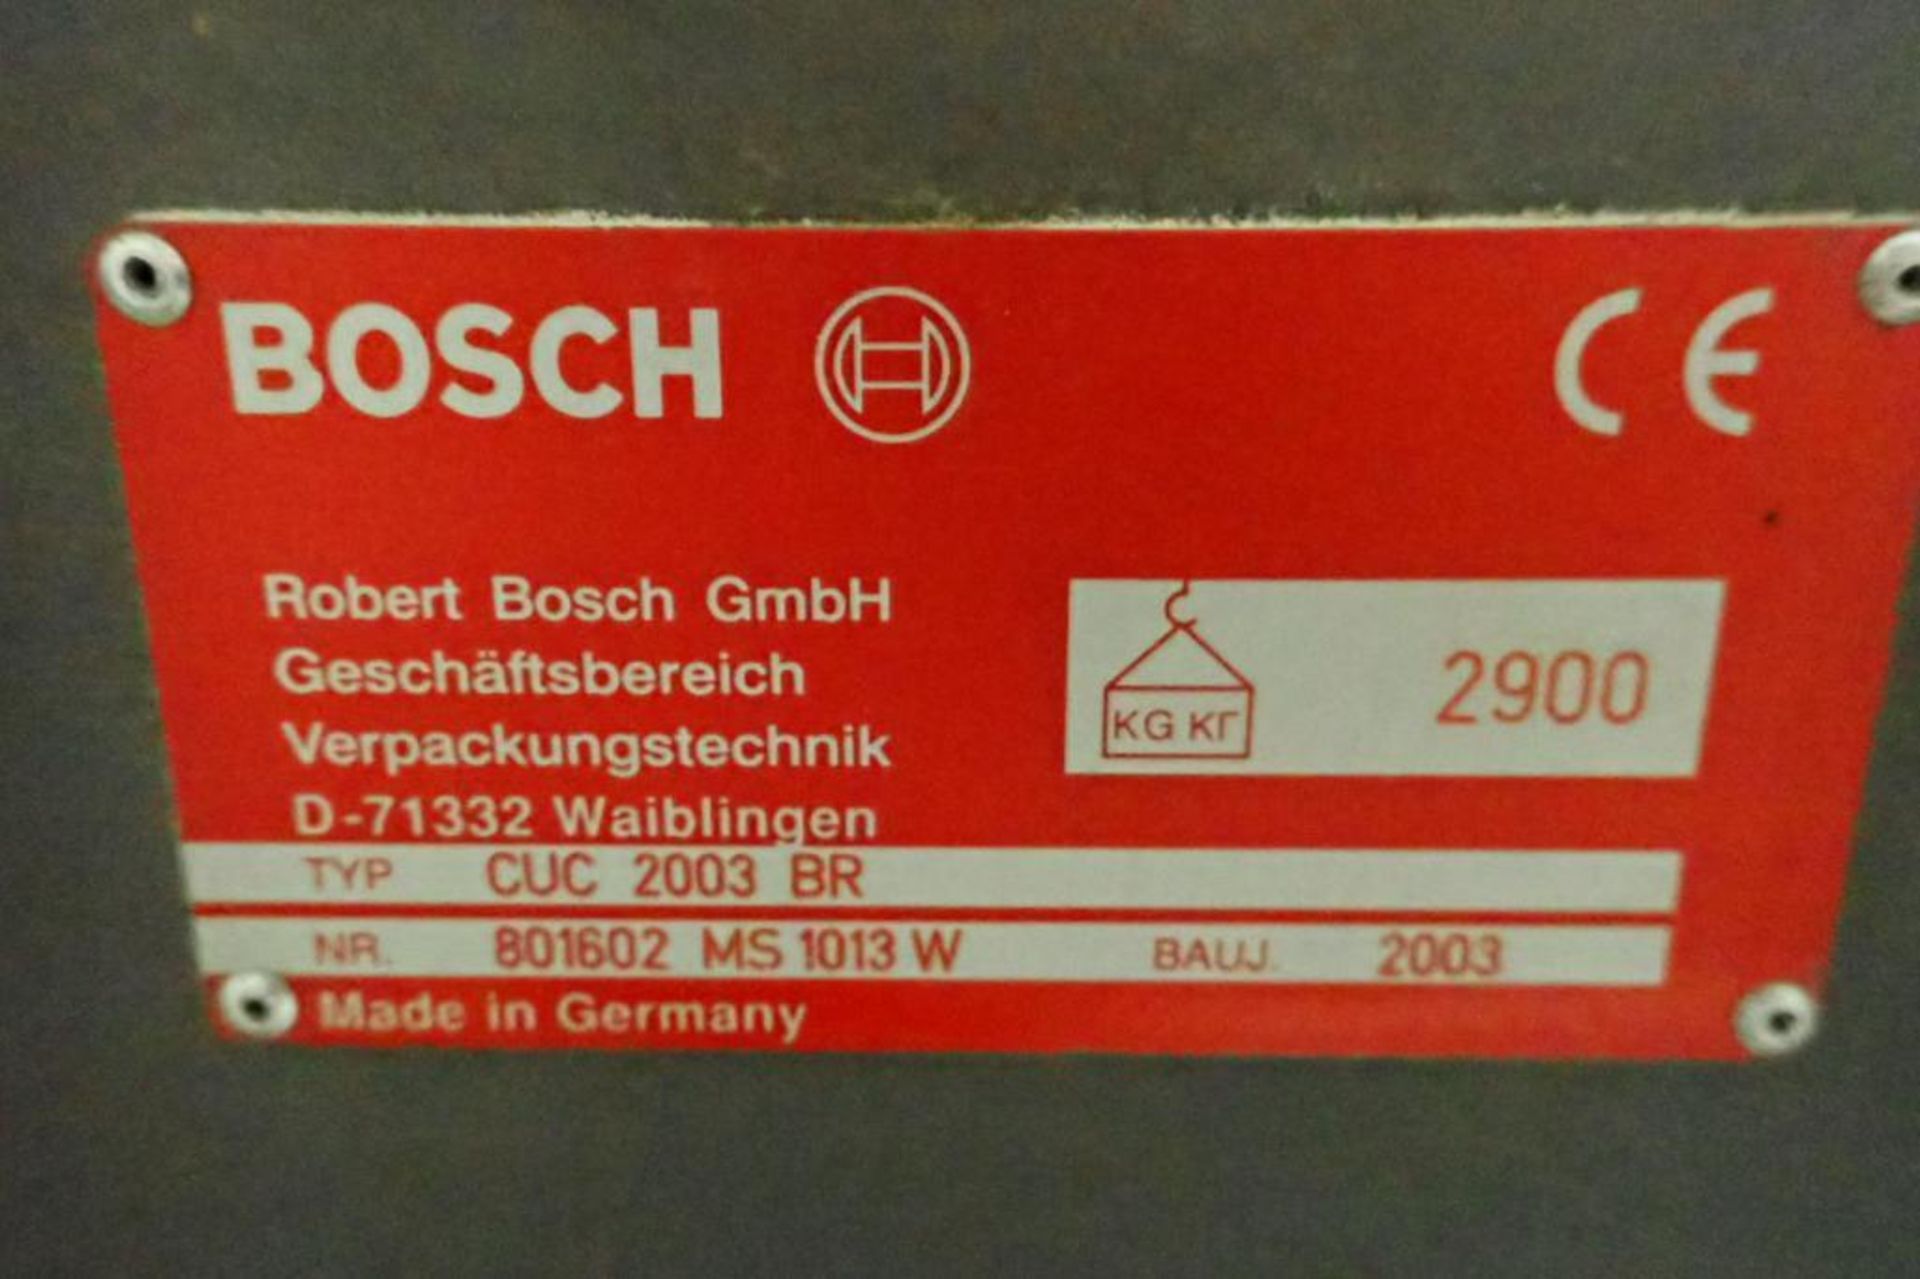 2003 Bosch cartoner, Model CUC 2003 BR, SN 801602 MS 1013 W, pasta inserter, sauce inserter, parts m - Bild 2 aus 22